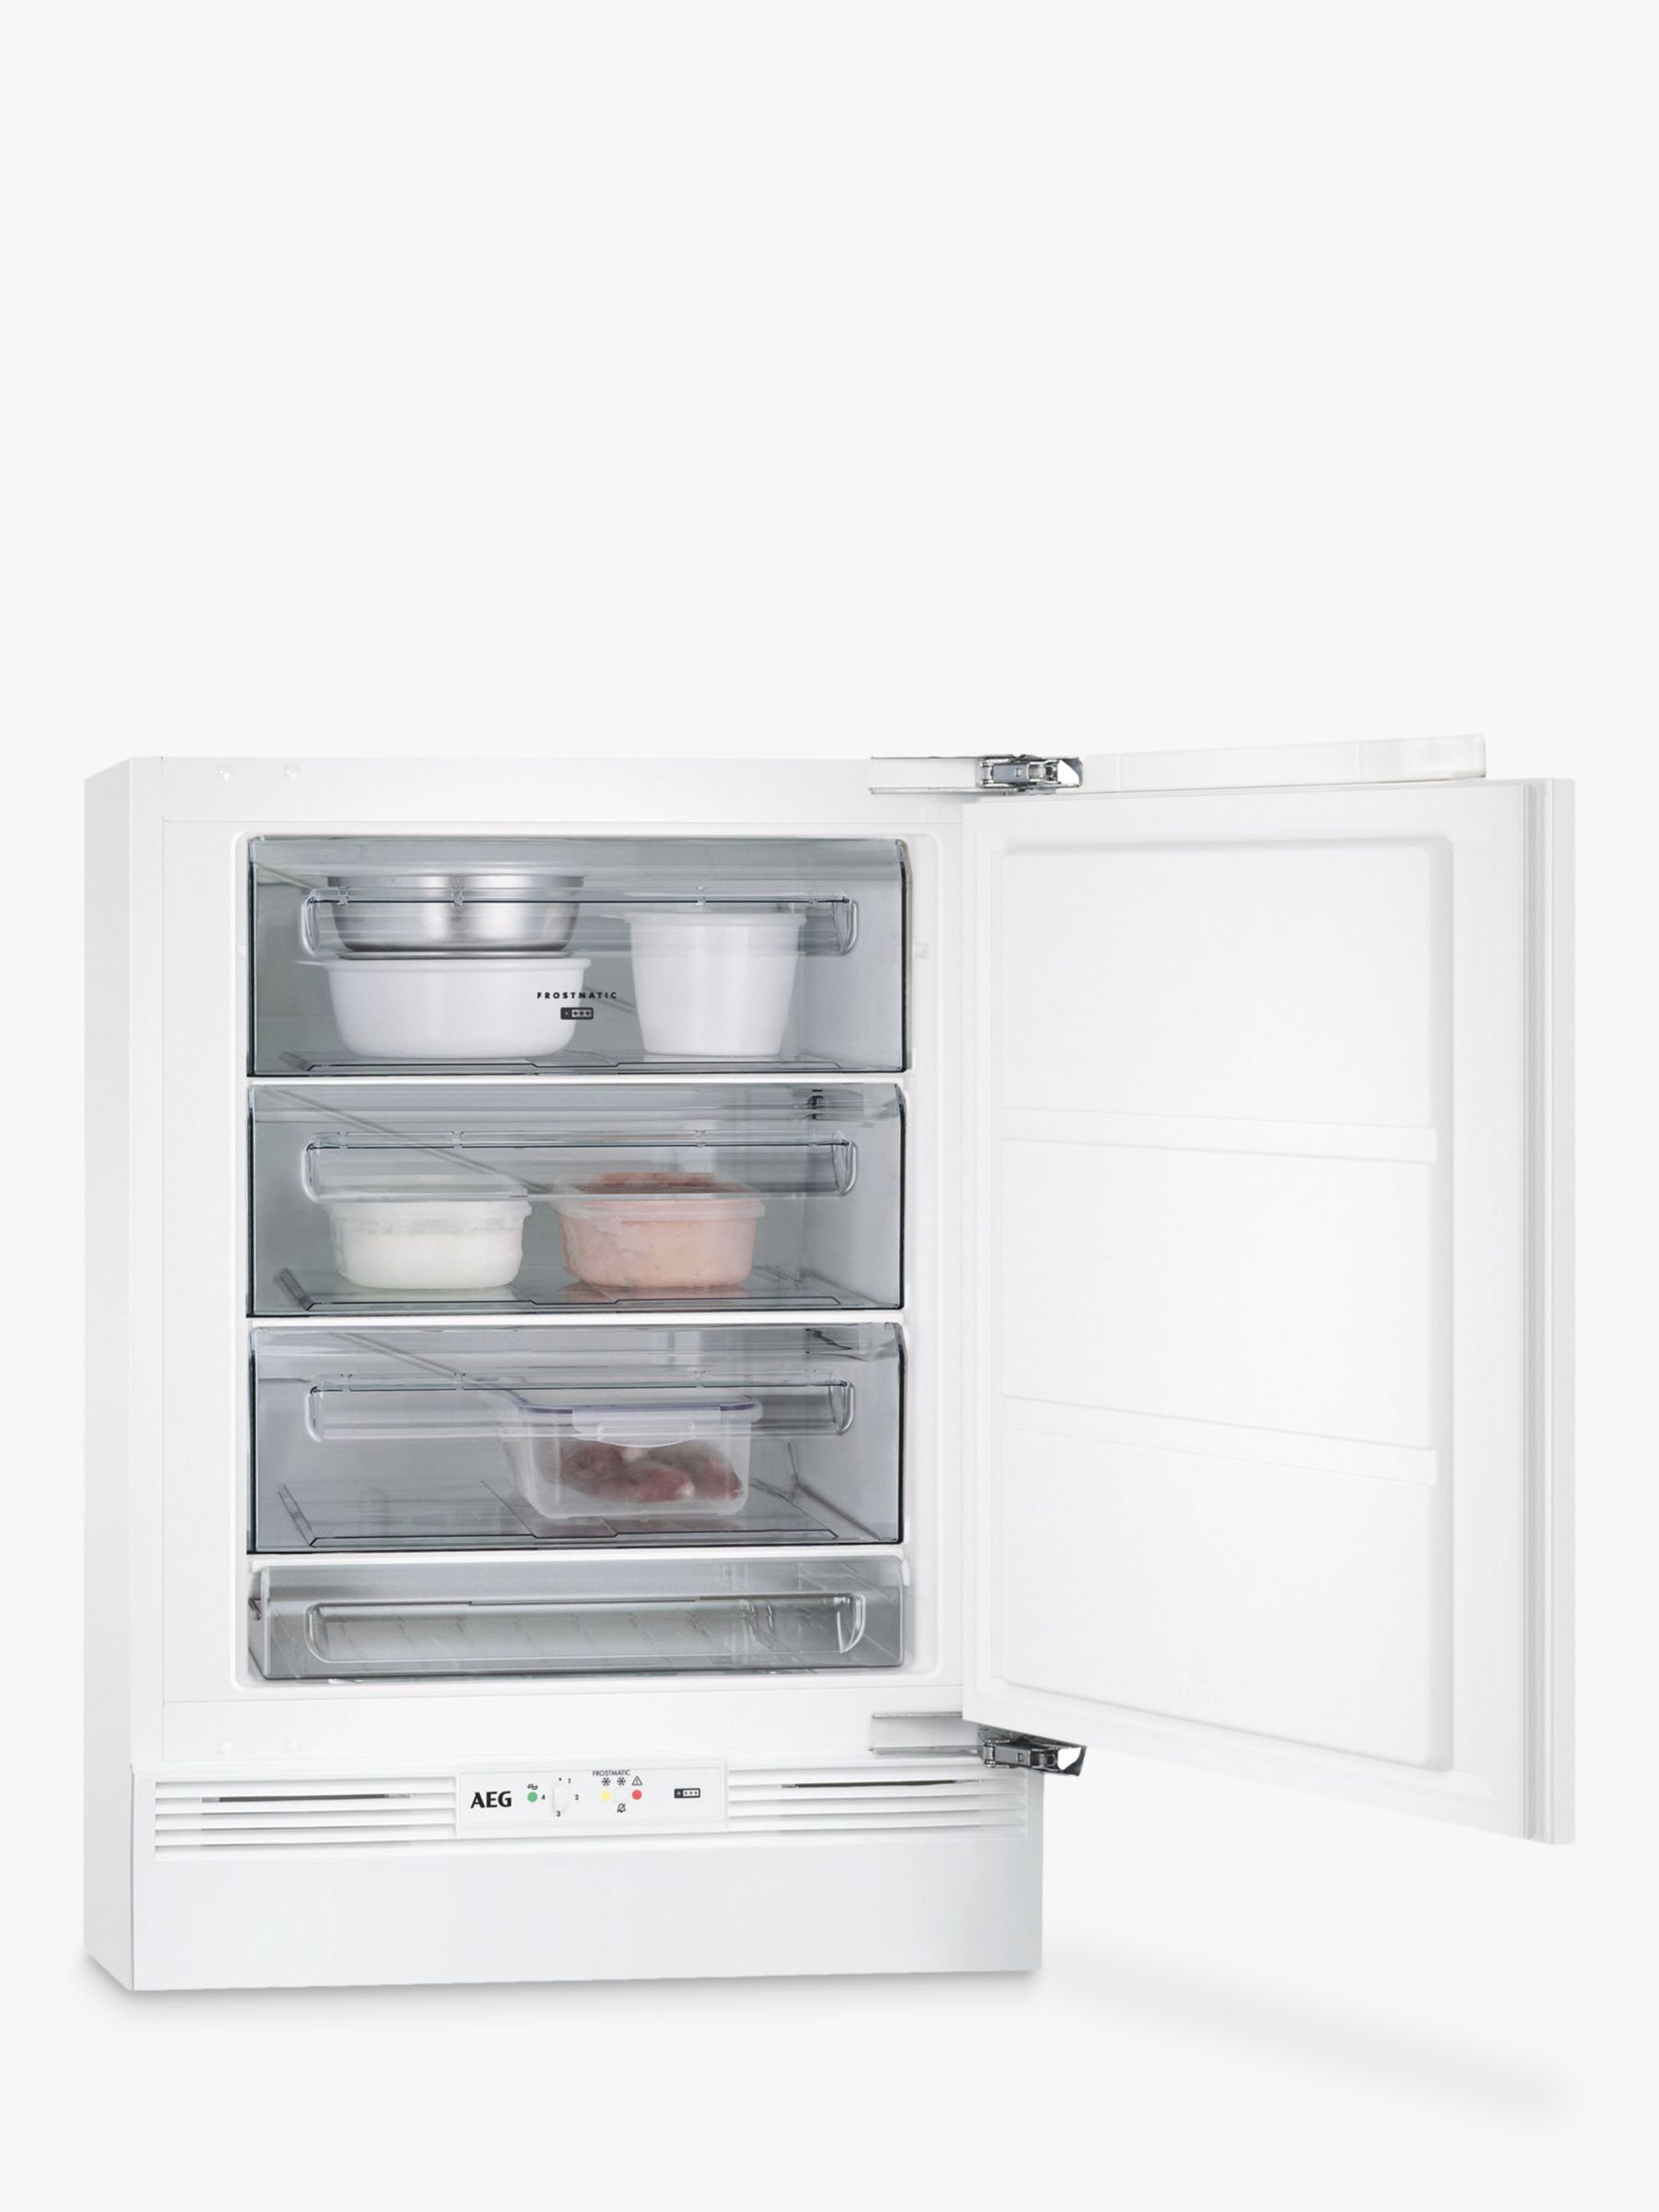 AEG ABE6822VAF Built-Under Freezer, A++ Energy Rating, 60cm Wide, White